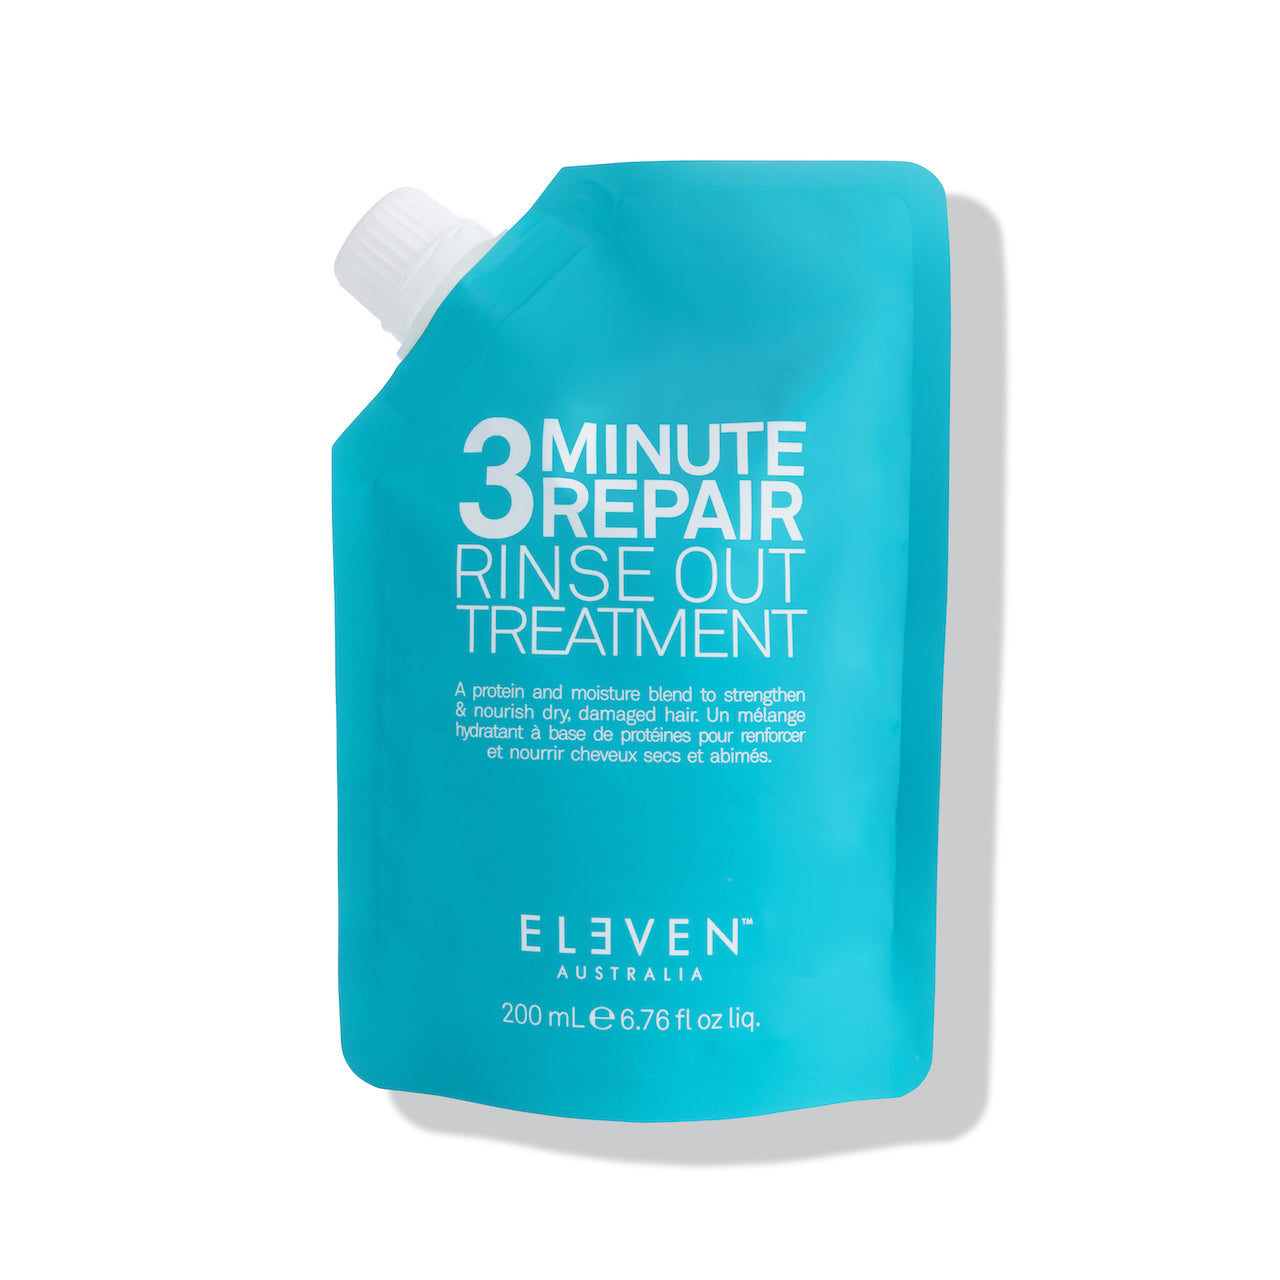 3 Minute Repair Rinse Out Treatment - 200ml - ELEVEN Australia